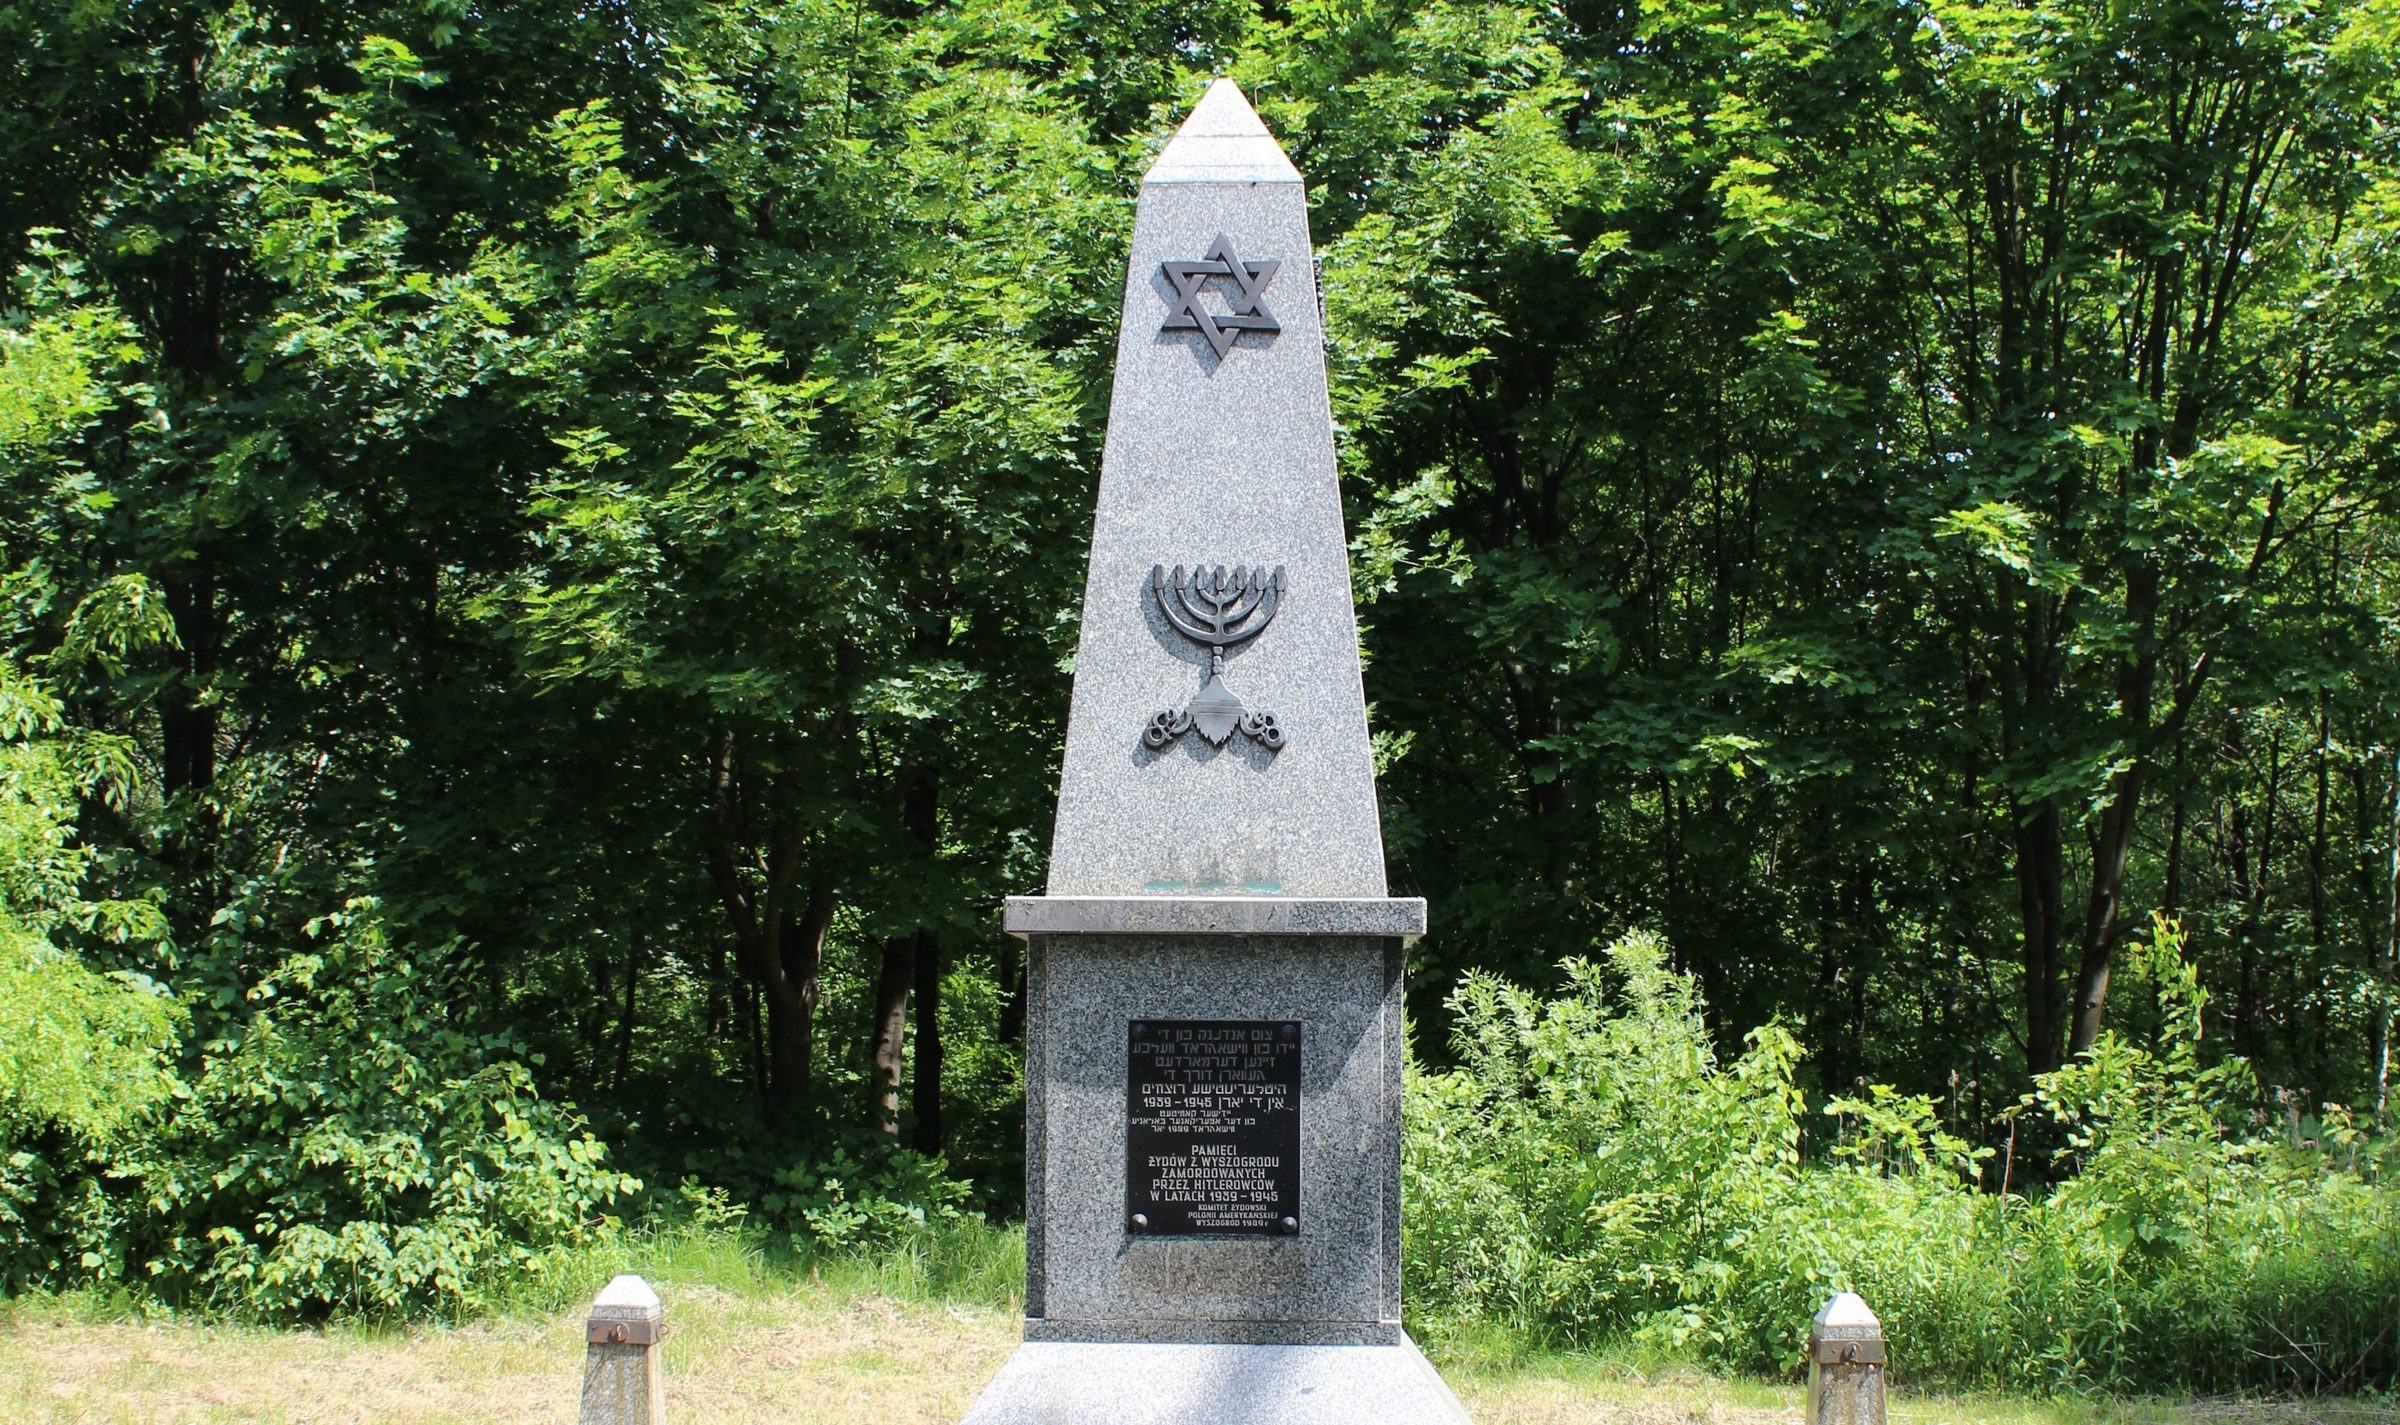 Remembrance of Jews of Wyszogród